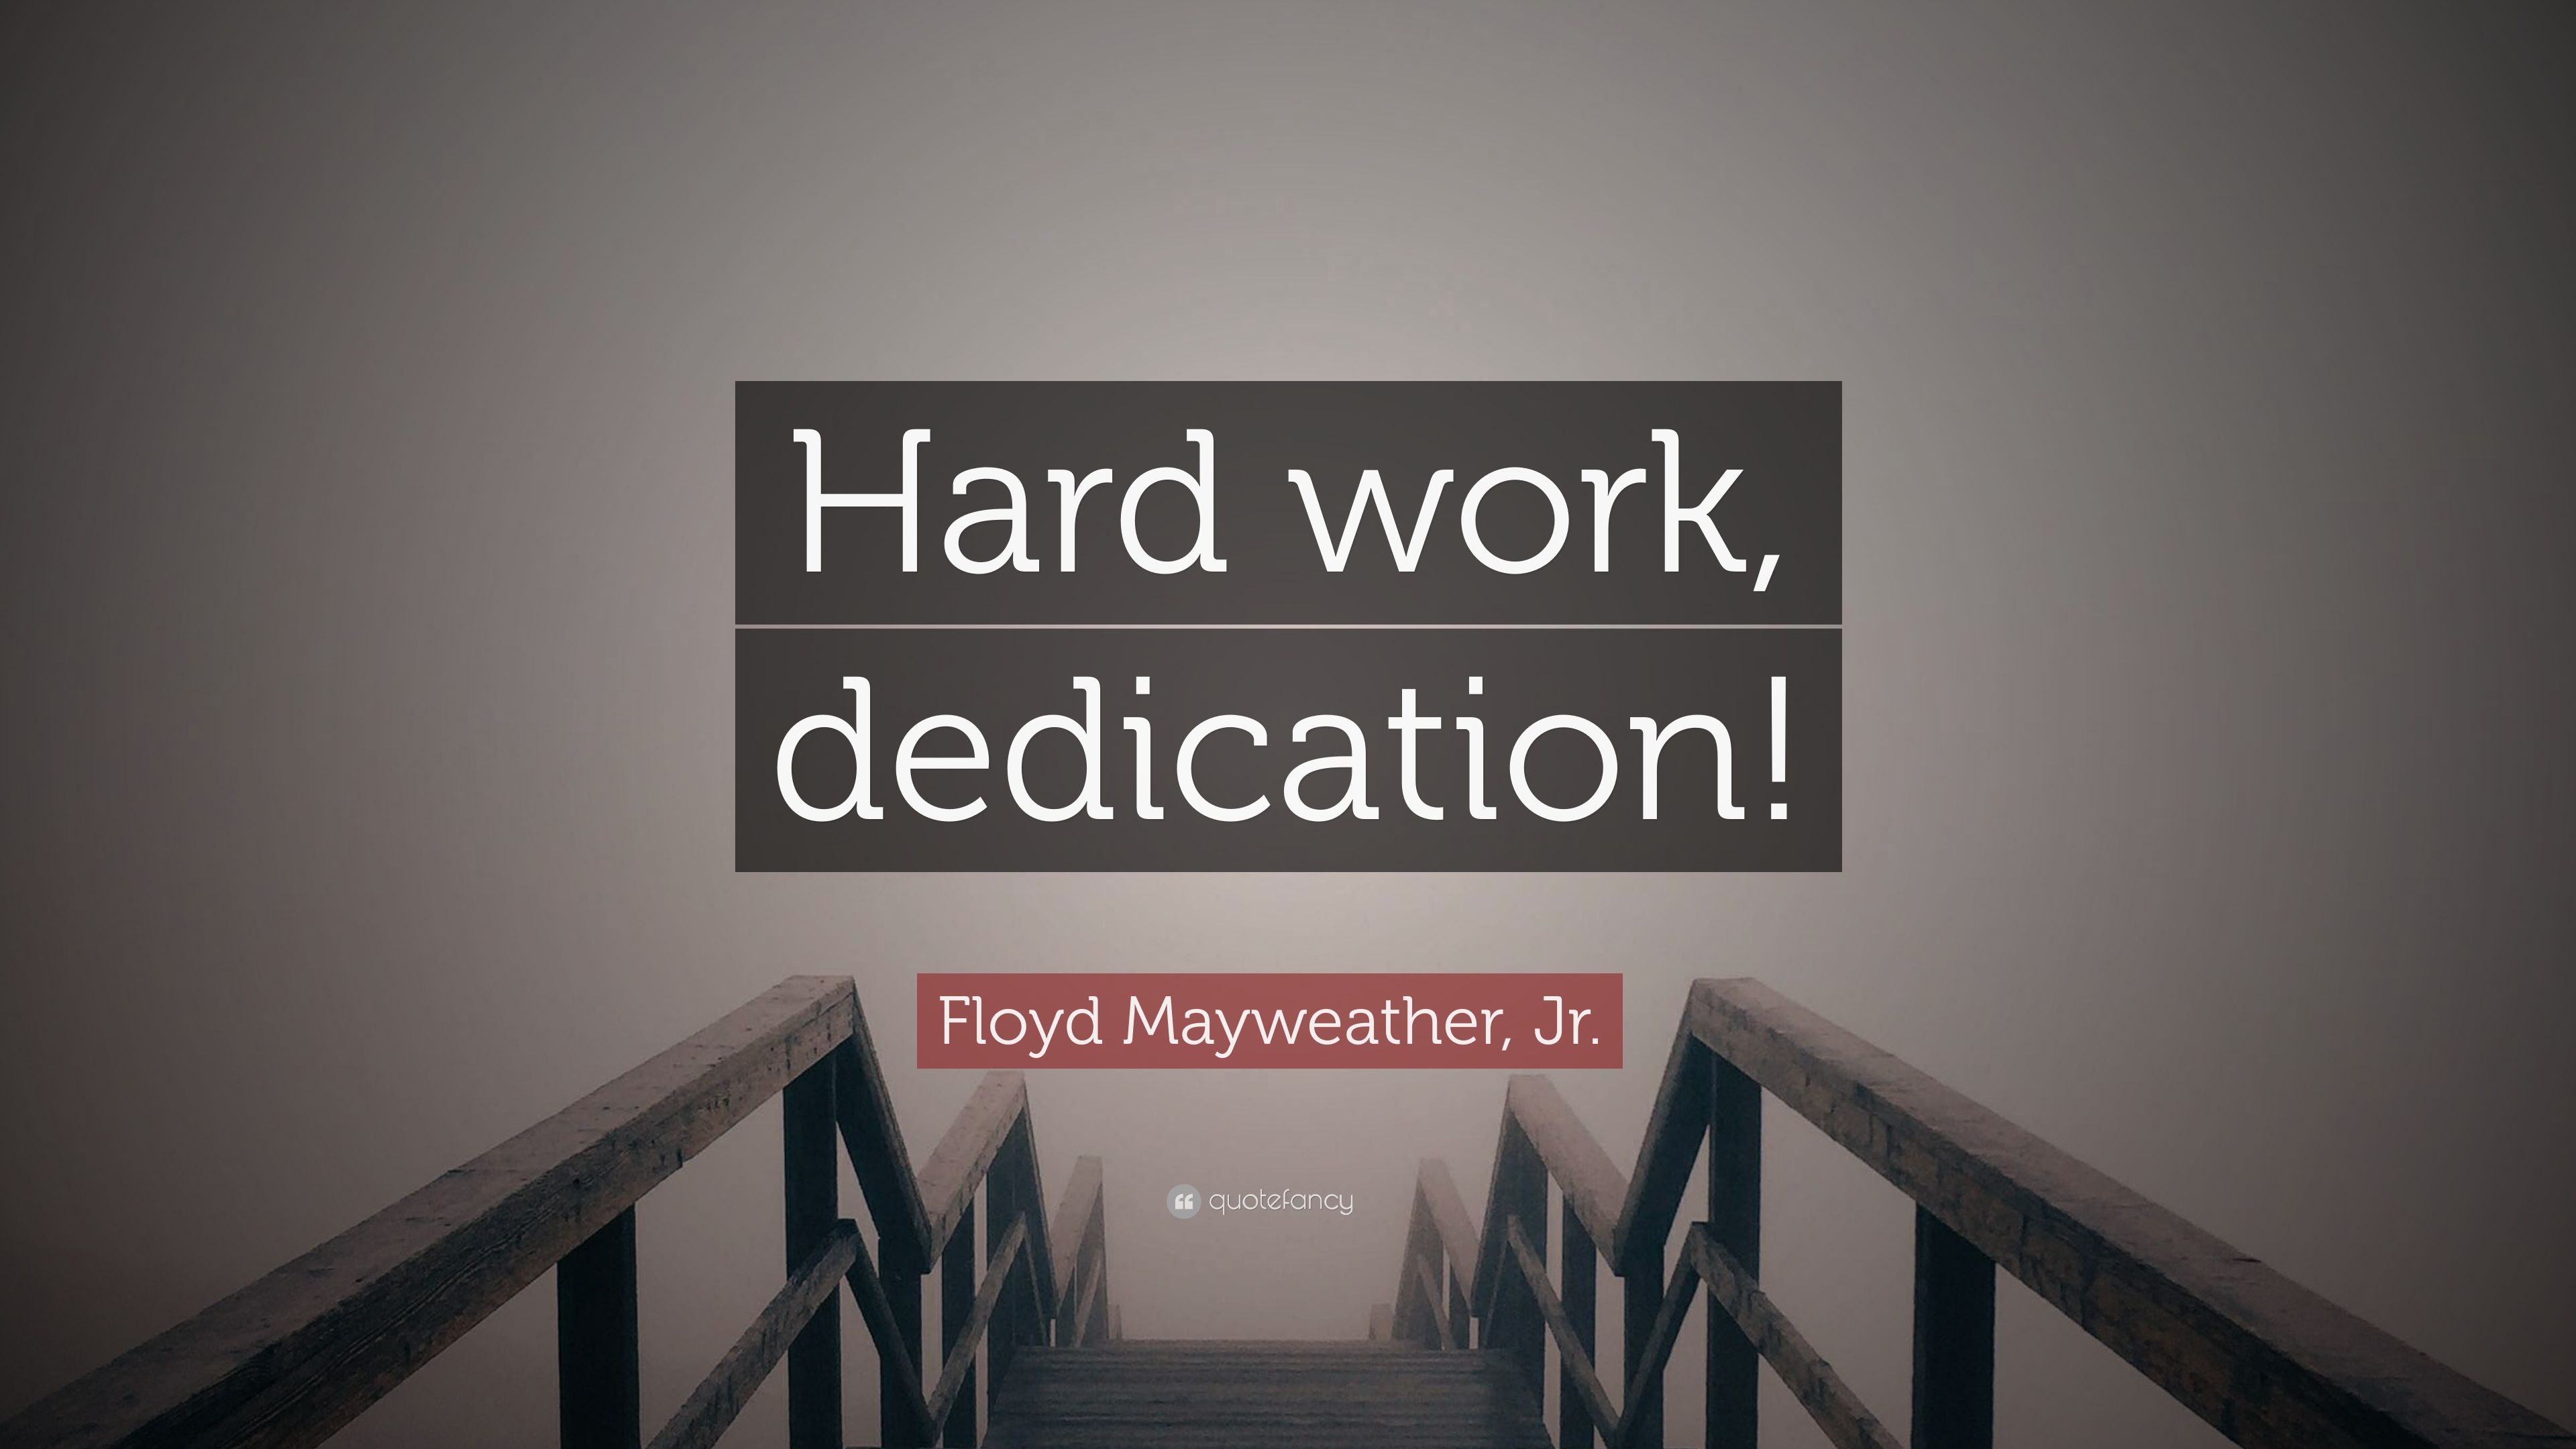 Floyd Mayweather, Jr. Quote: “Hard work, dedication!” 12